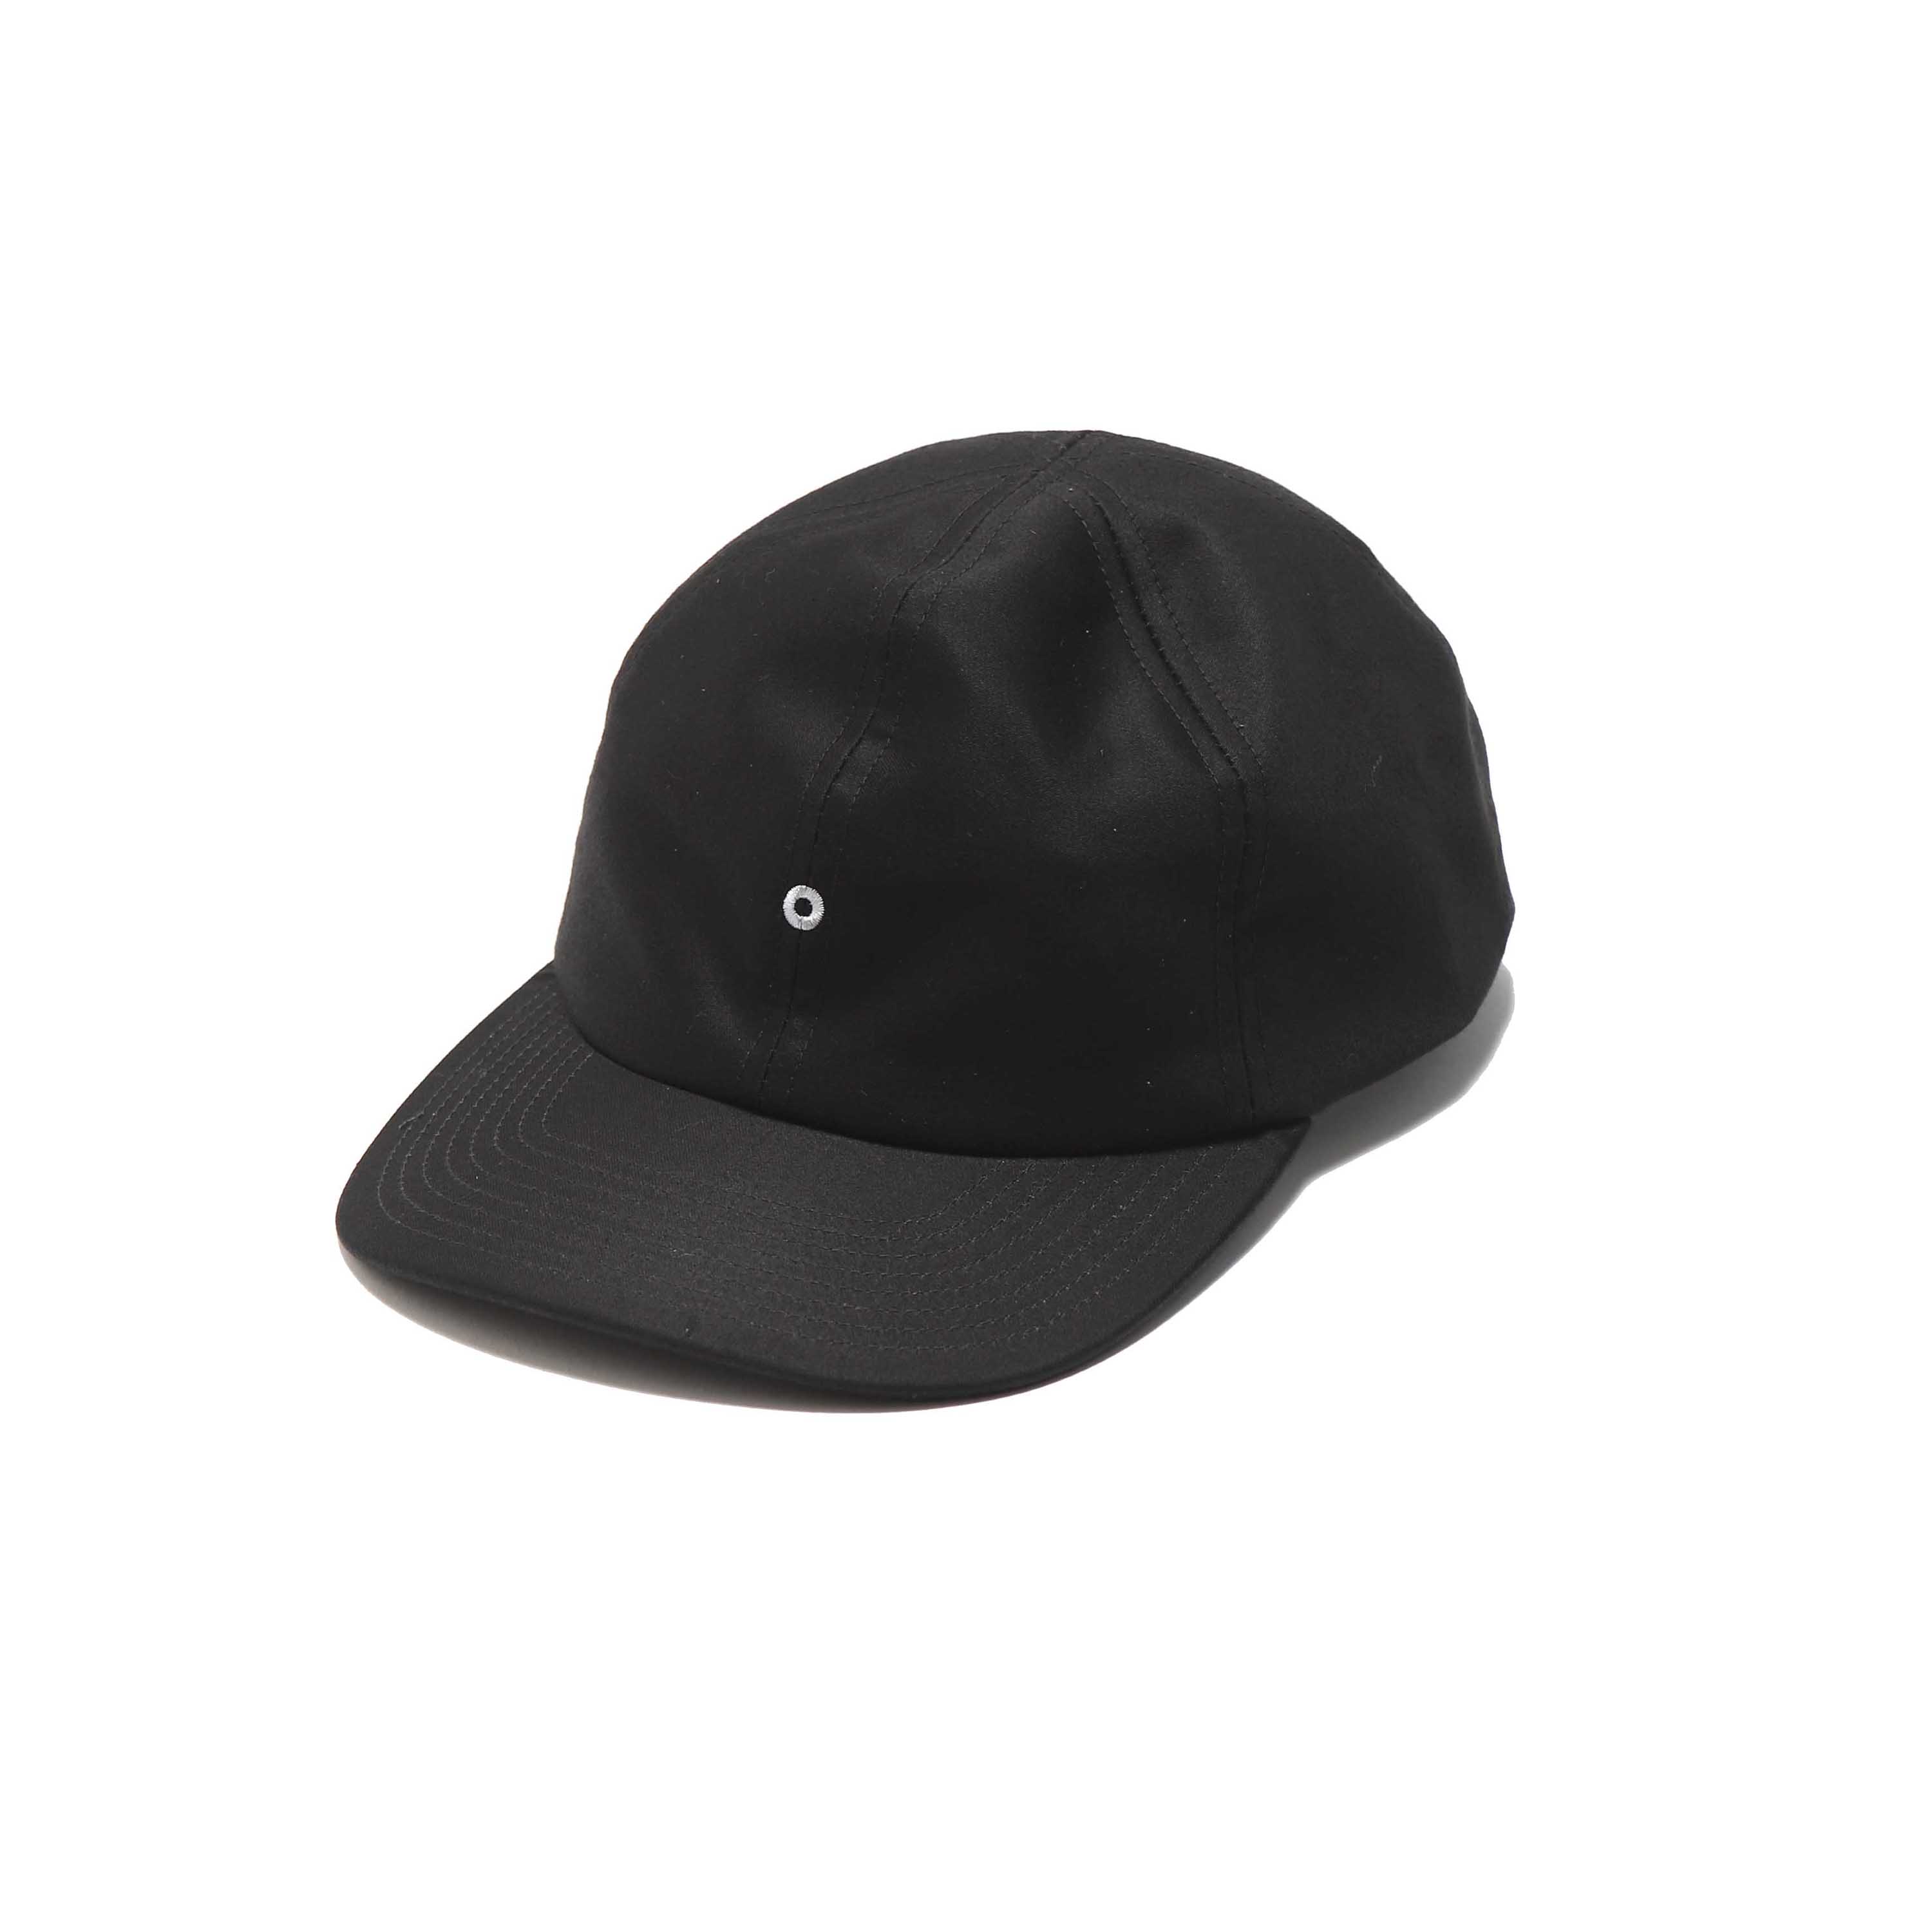 POST BALL CAP - BLACK